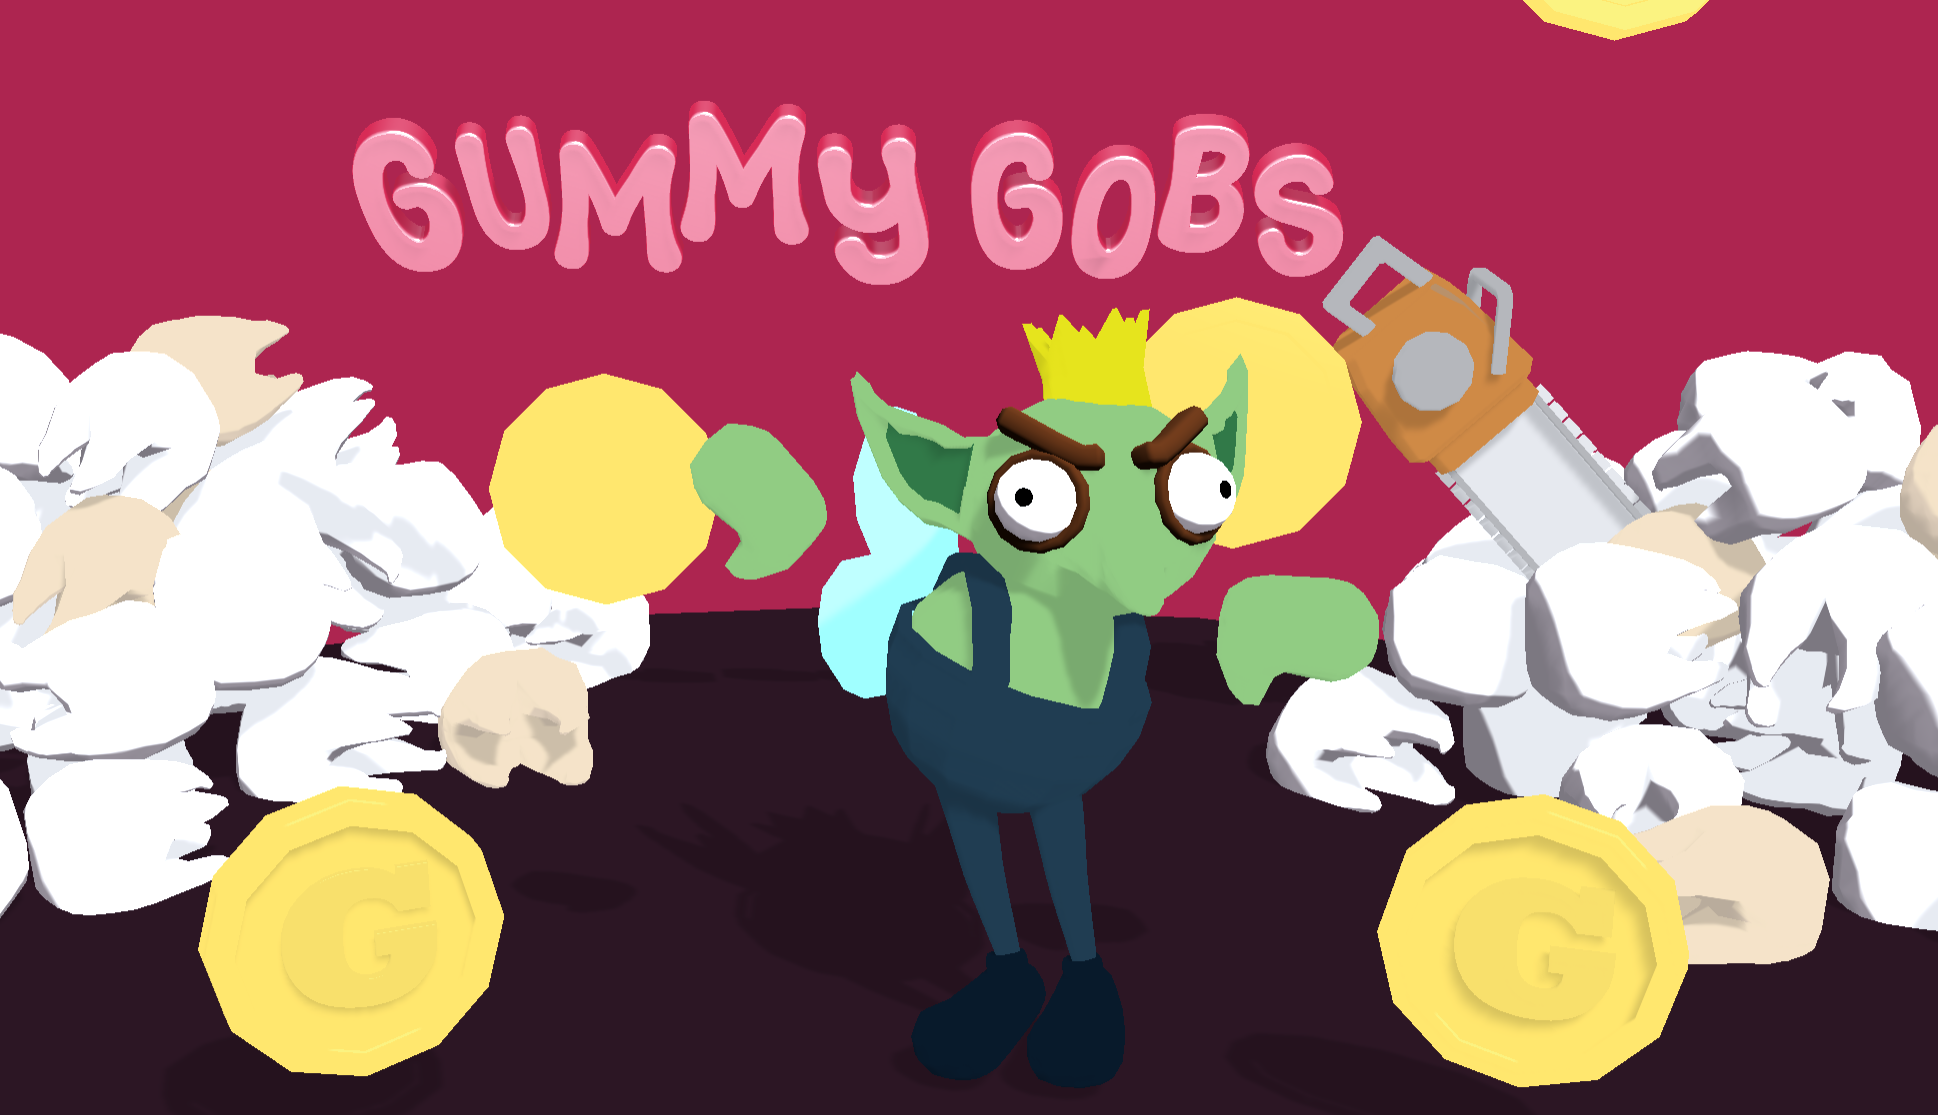 Gummy Gobs